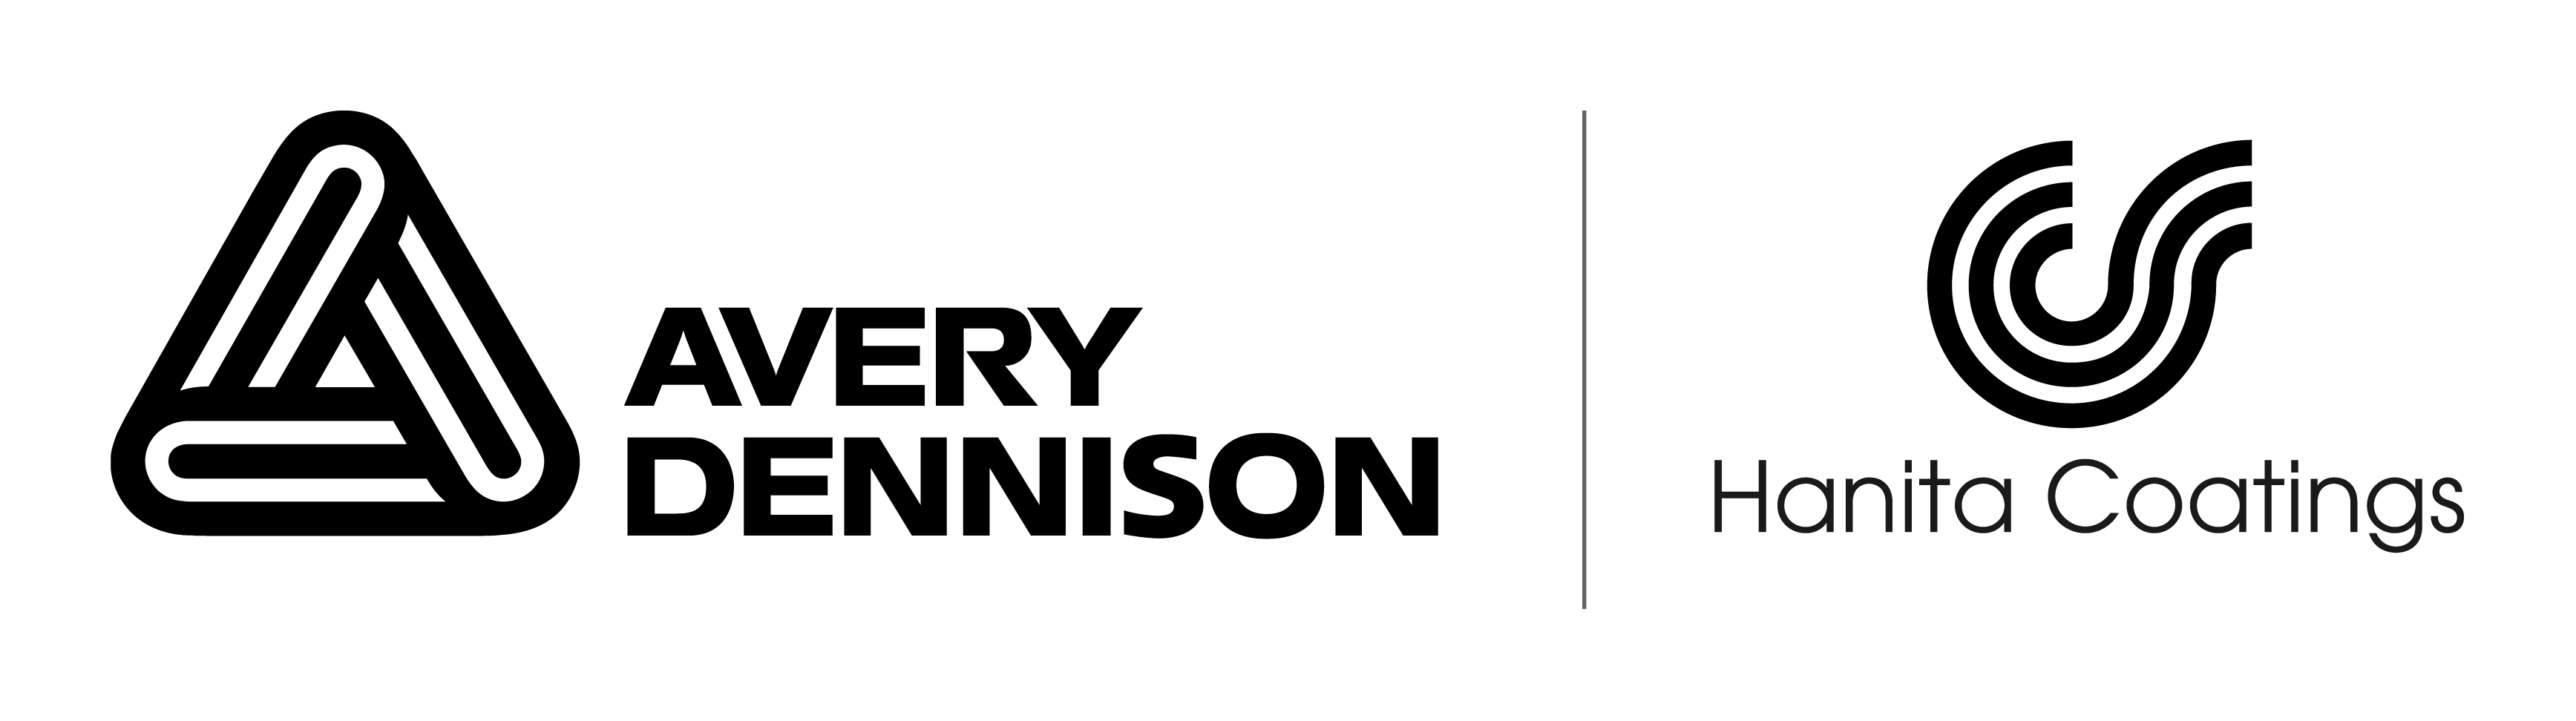 Avery Dennison Logo - Home